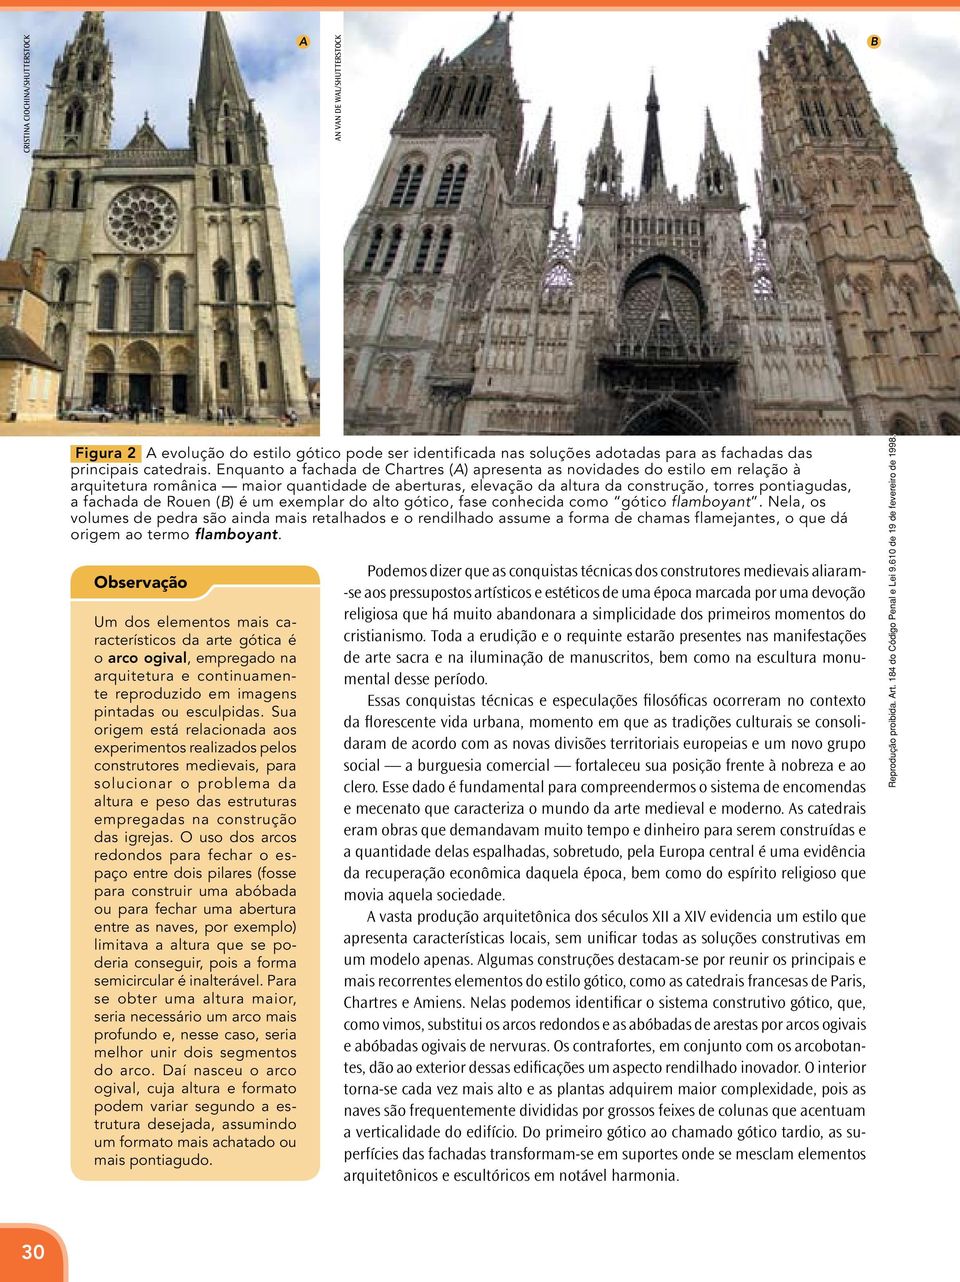 Rouen (B) é um exemplar do alto gótico, fase conhecida como gótico flamboyant.